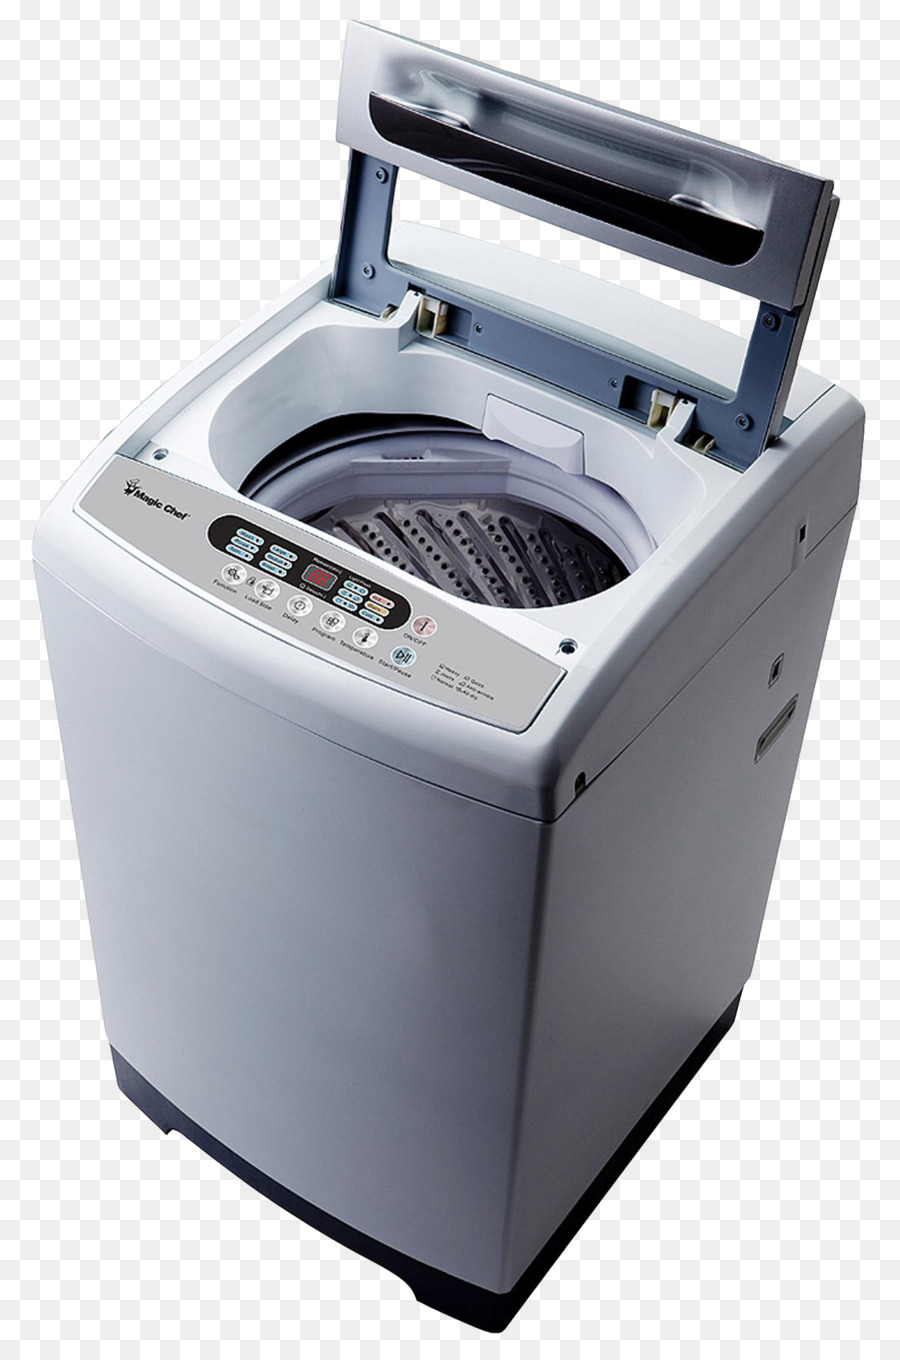 Waschmaschine Magic Chef-Combo Waschmaschine Trockner-Trockner - Waschmaschine